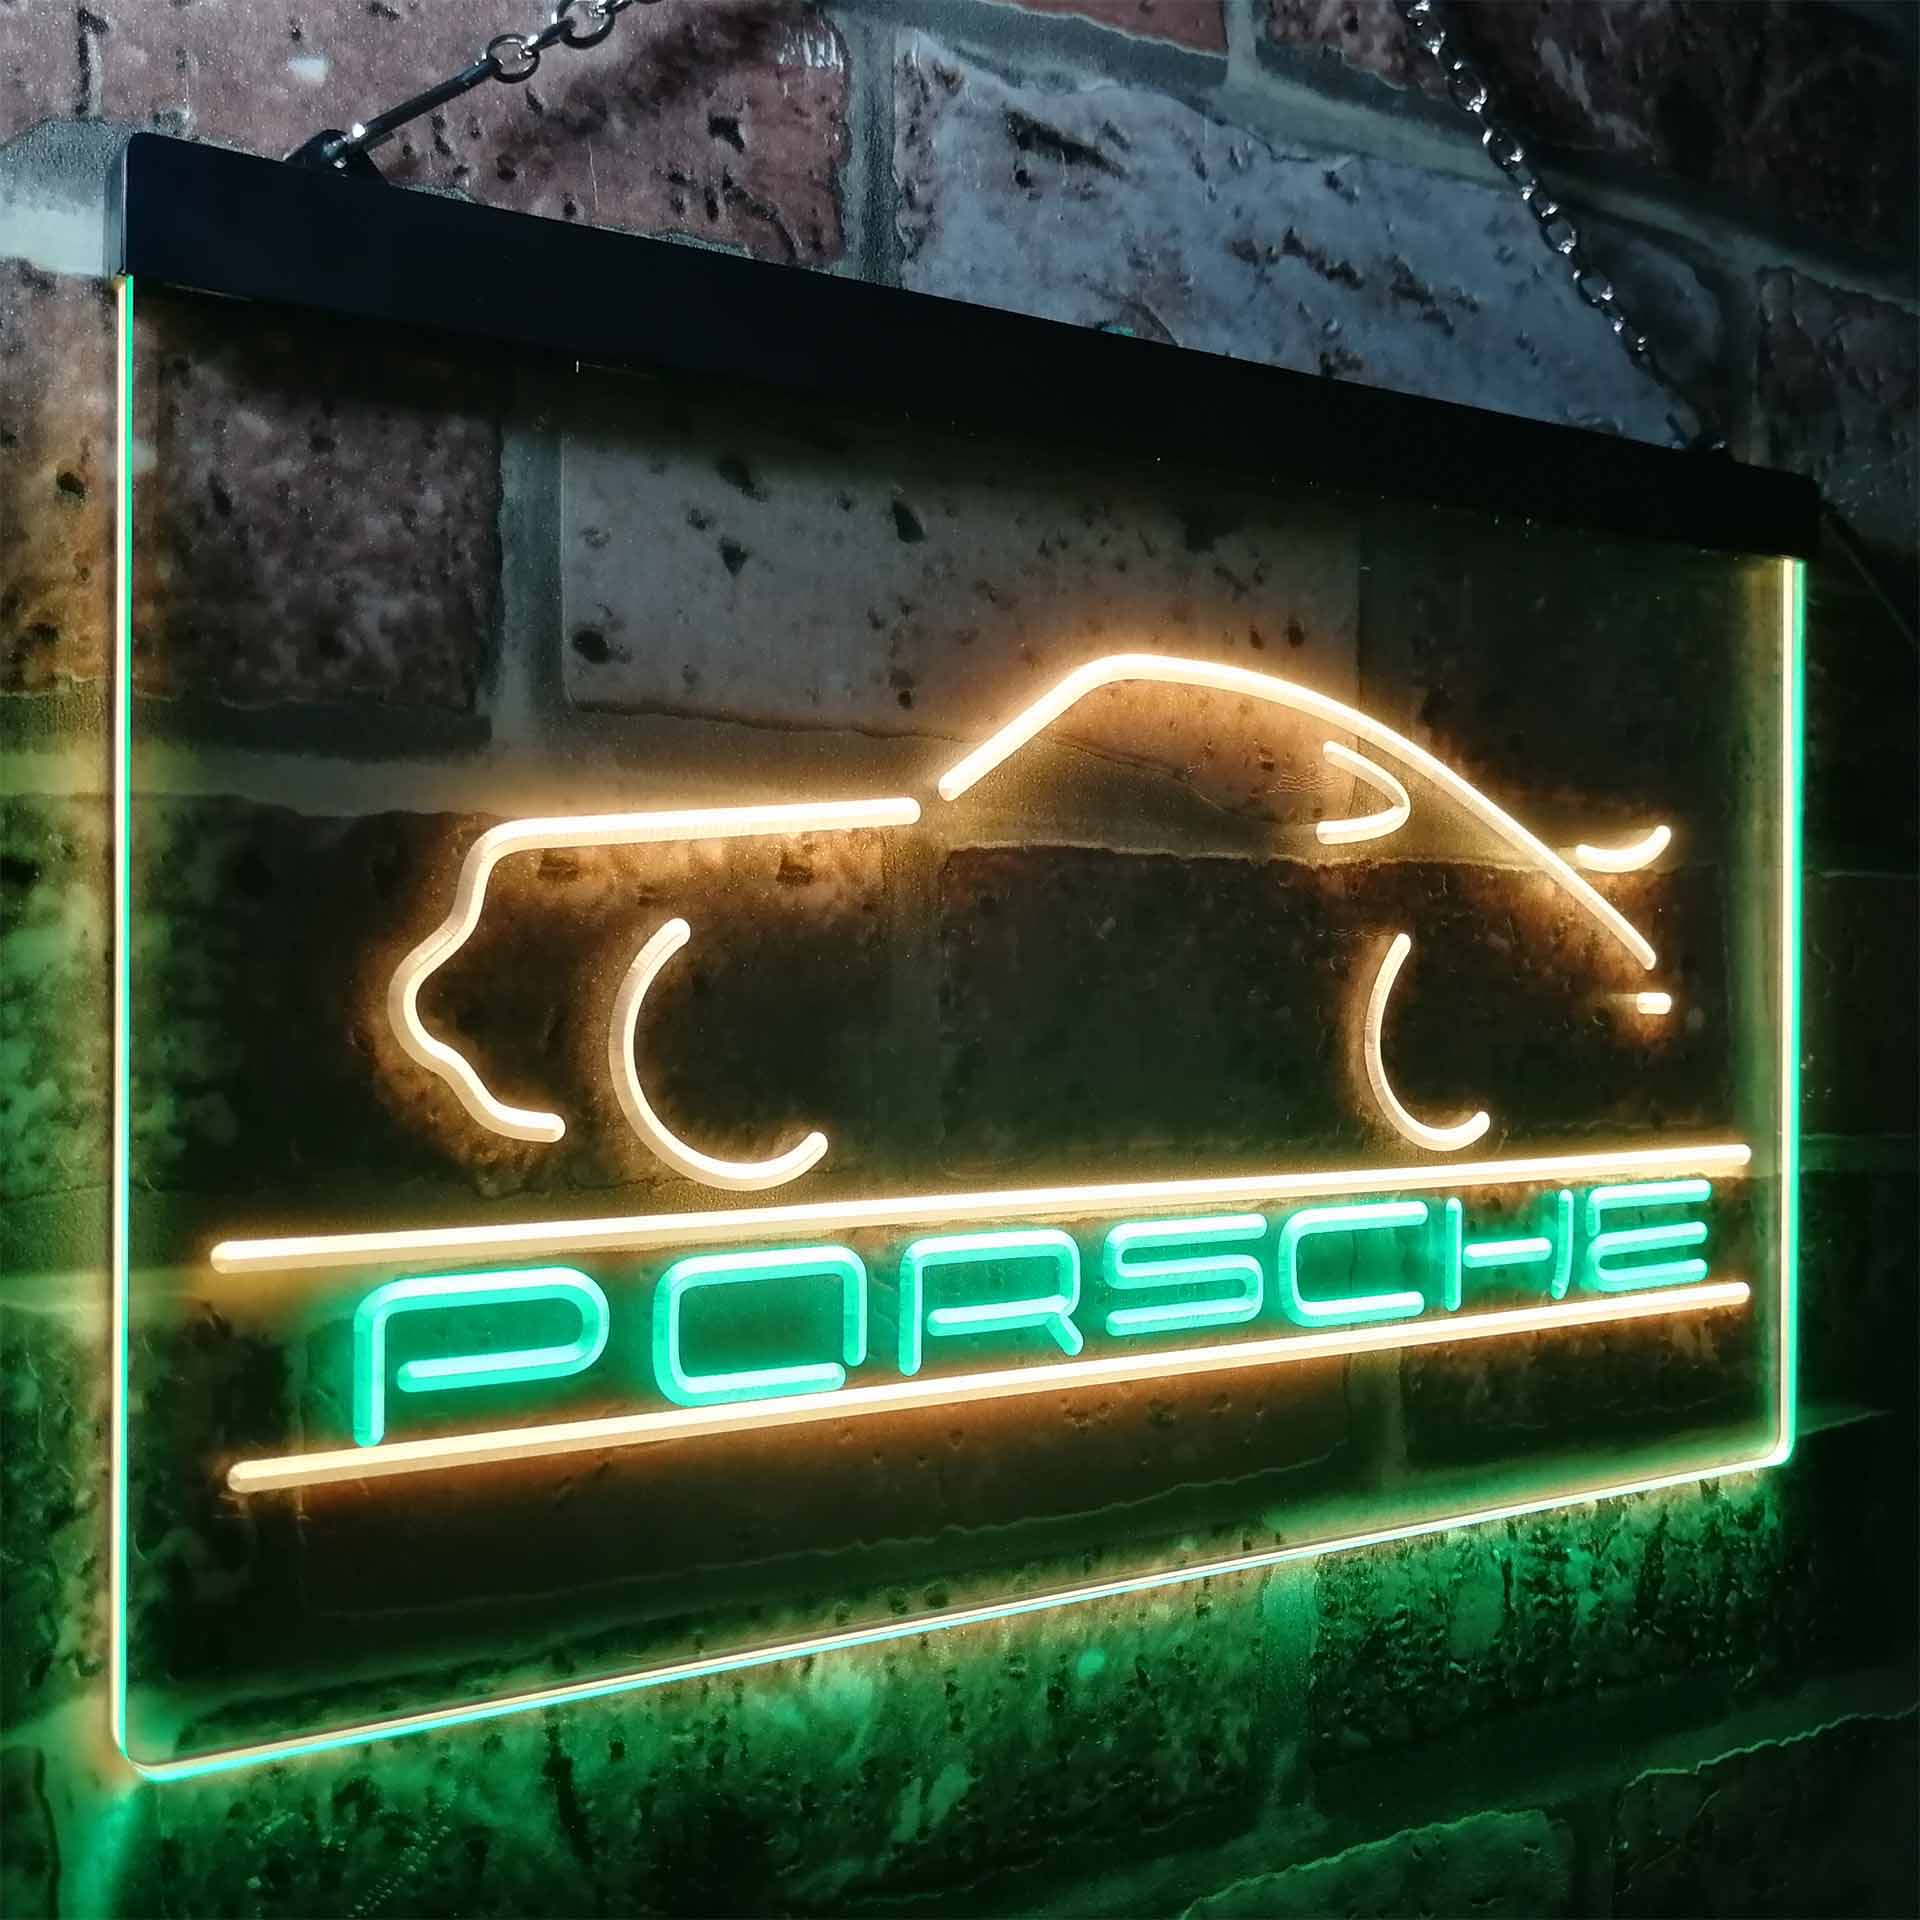 Porsche Car Neon-like LED Sign